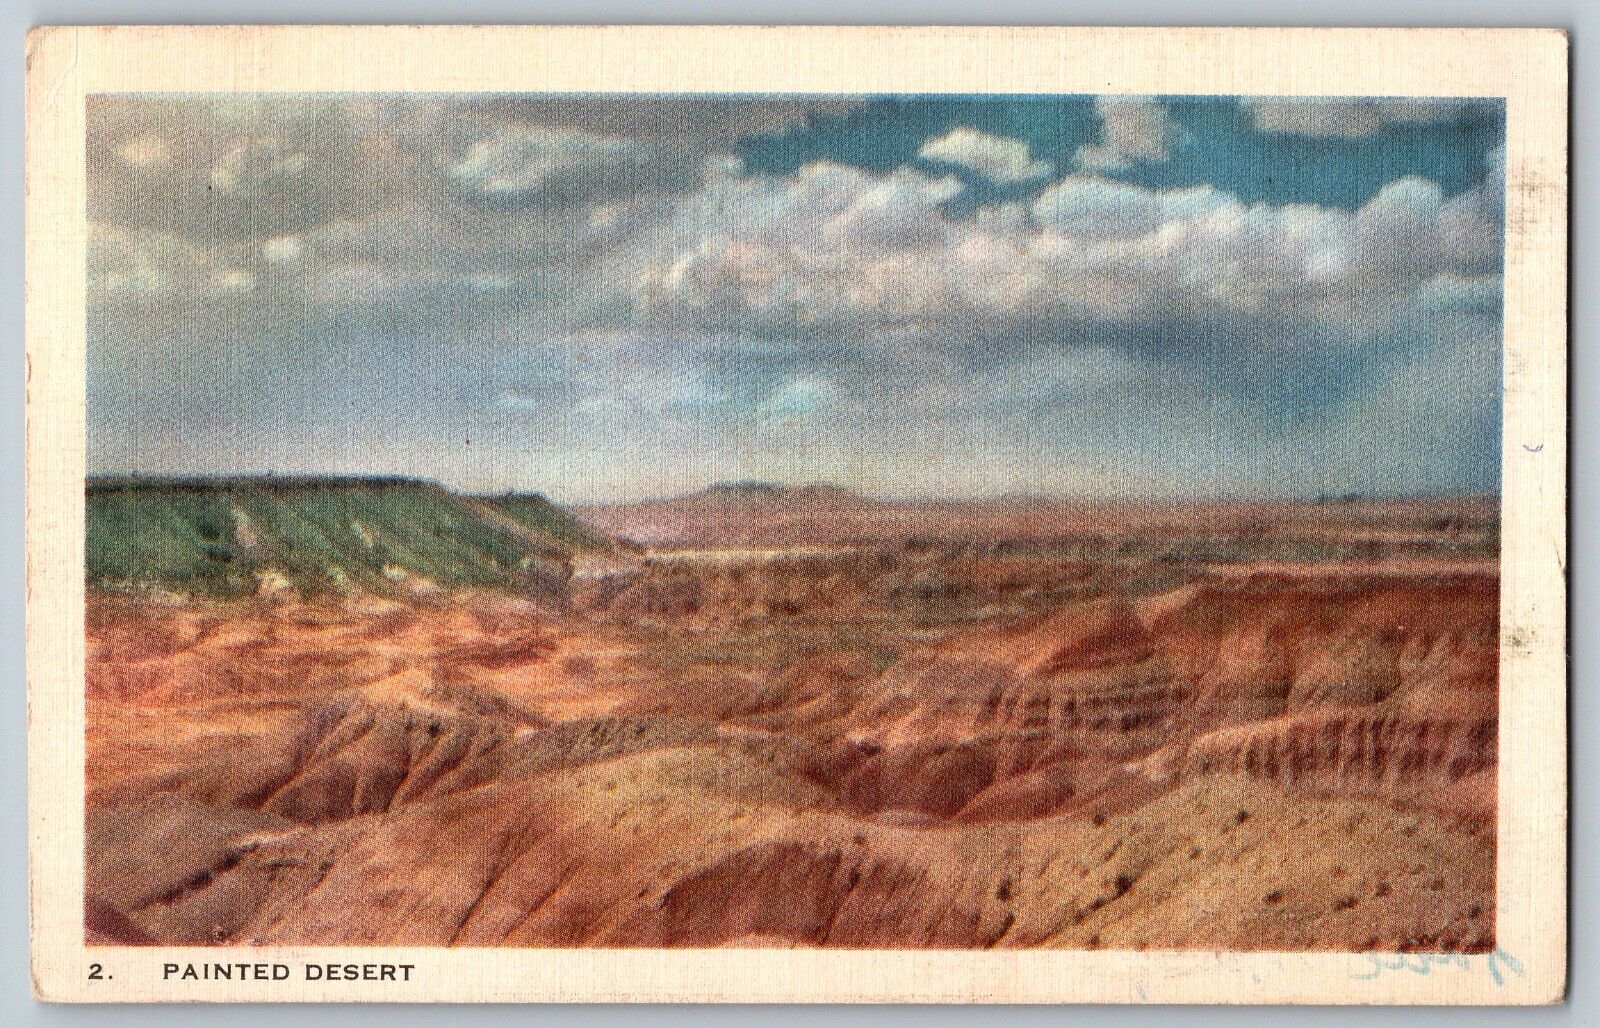 Arizona AZ - Painted Desert - Painting the Sands - Vintage Postcards - Posted